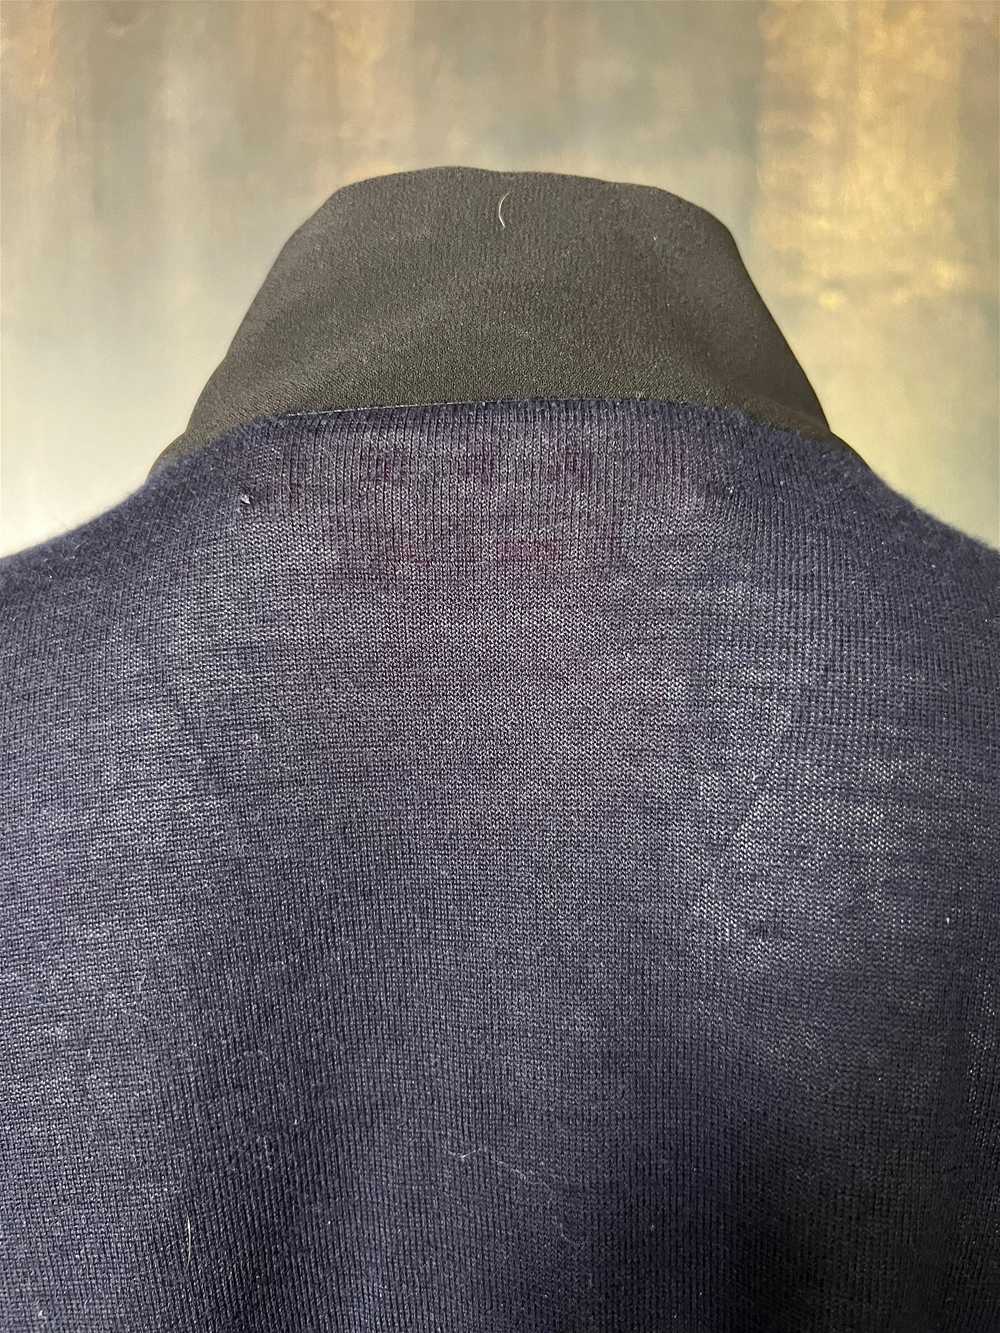 Marni Navy & Black Cardigan Sweater Top, Size 40 - image 3